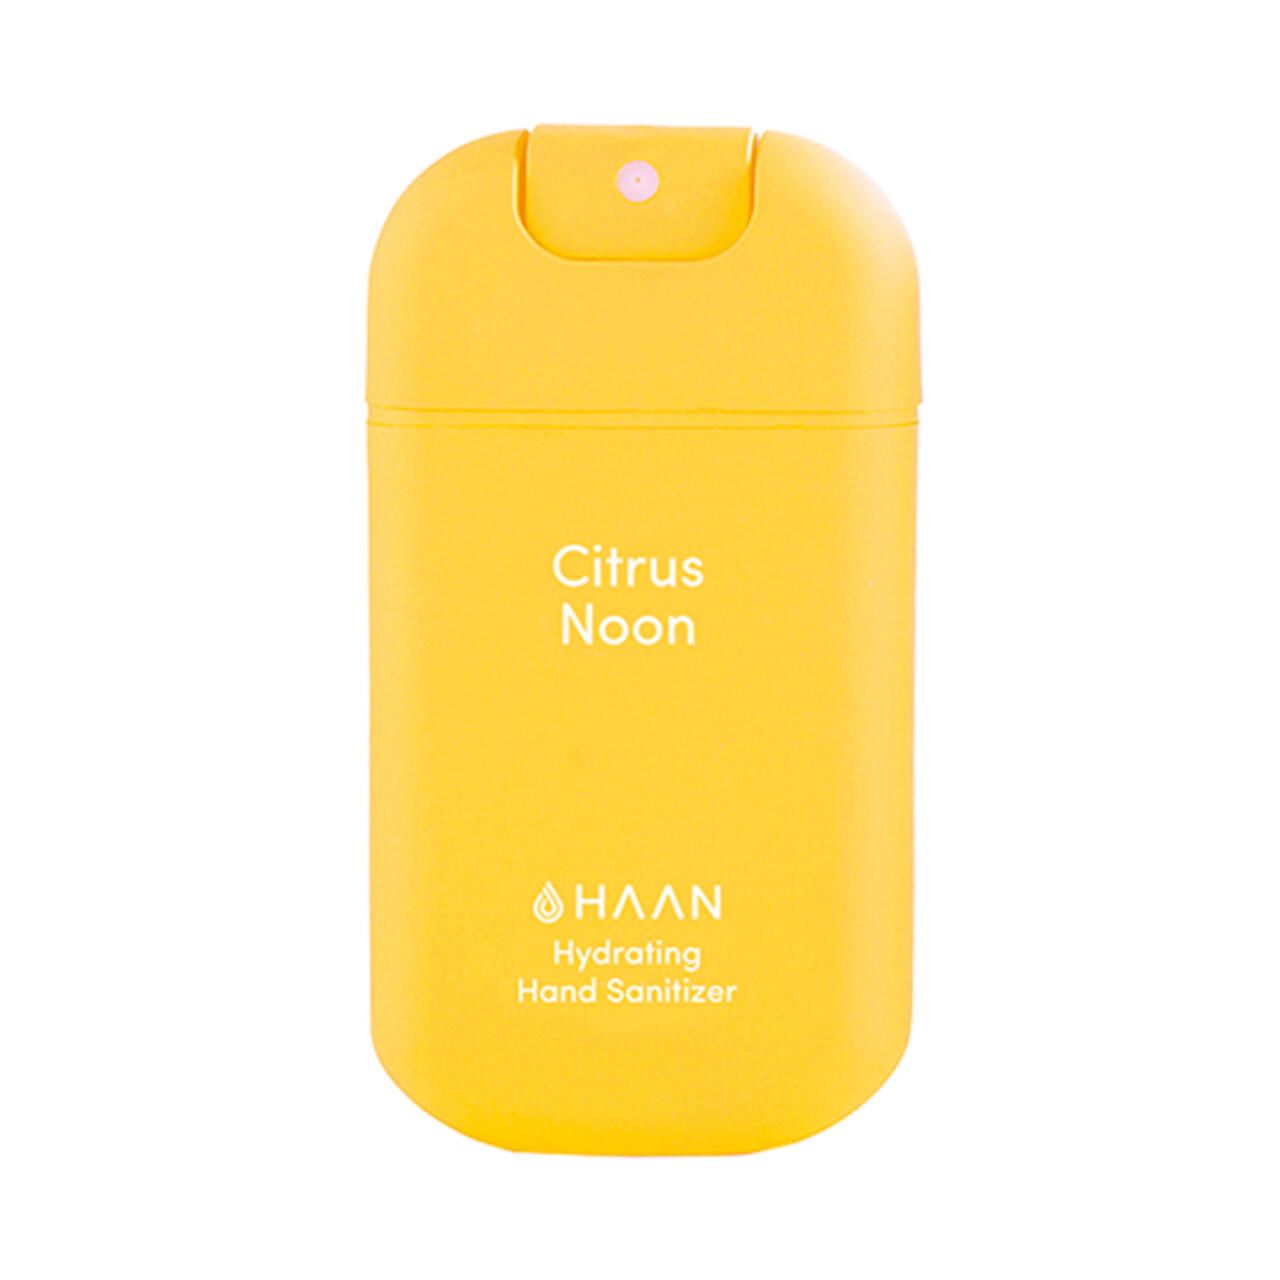 HAAN, Citrus Noon Hand Sanitizer Pocket